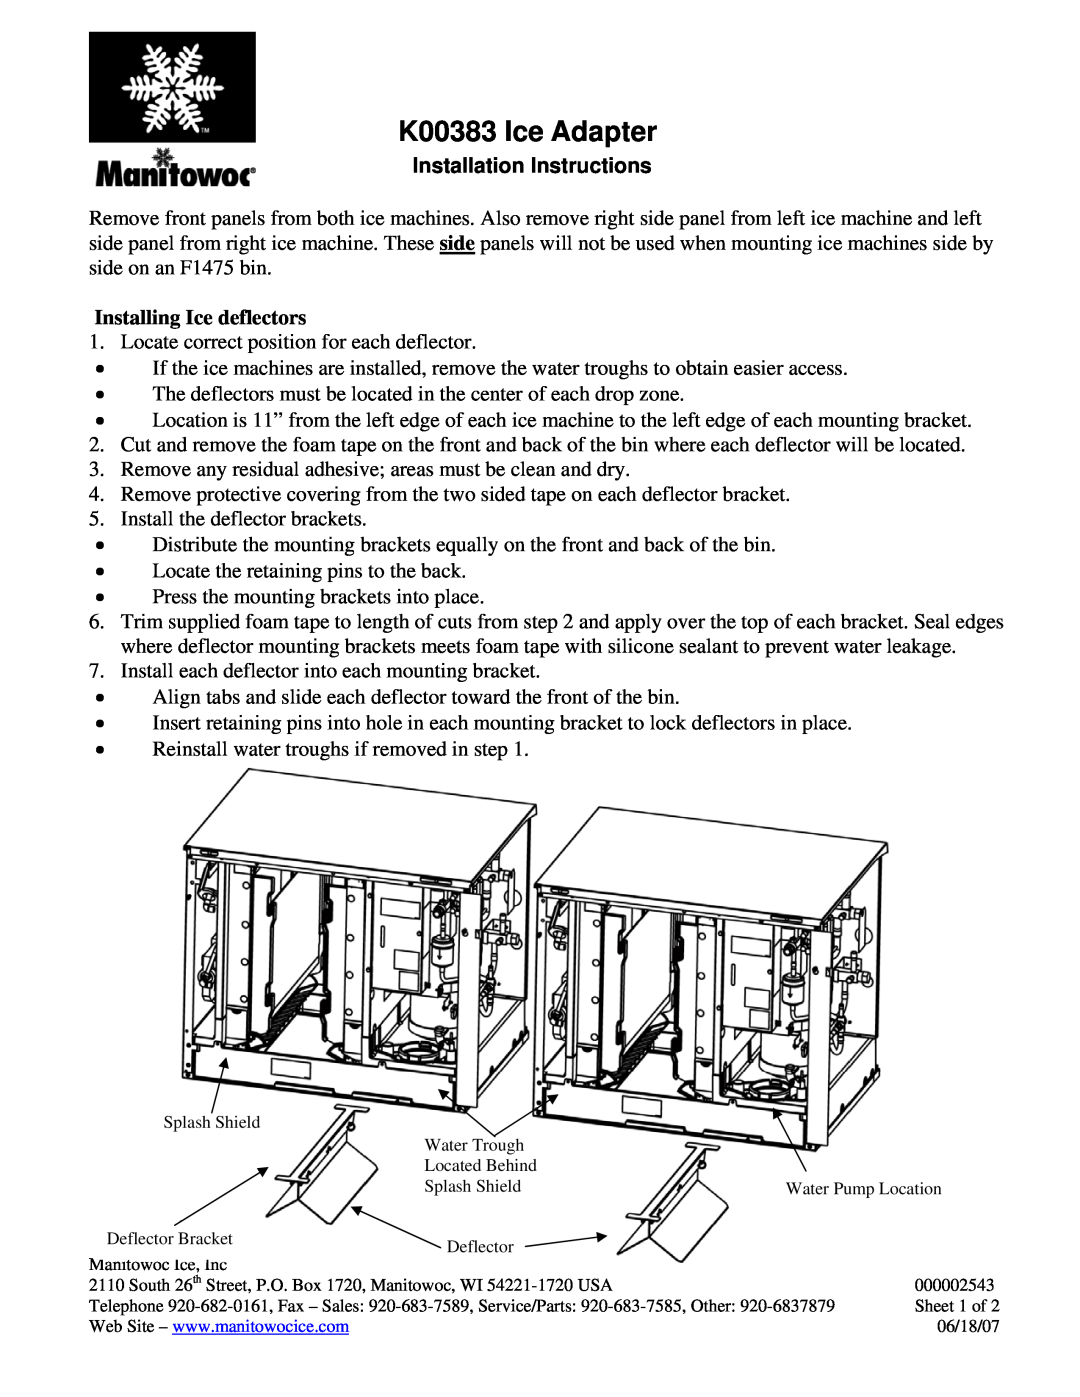 Manitowoc Ice installation instructions Installing Ice deflectors, K00383 Ice Adapter, Installation Instructions 